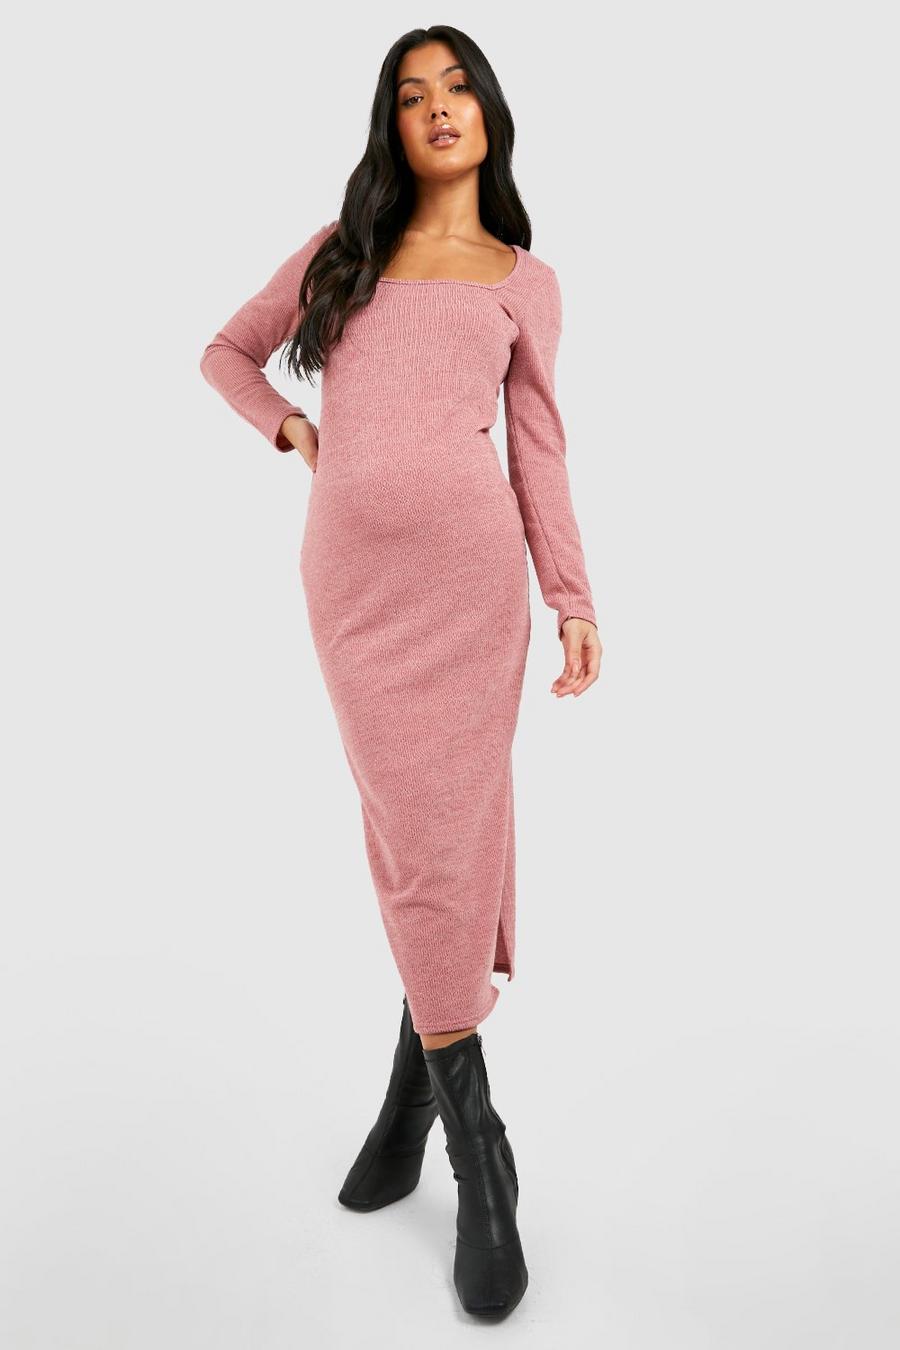 Rose pink Maternity Square Neck Soft Knit Jumper Dress